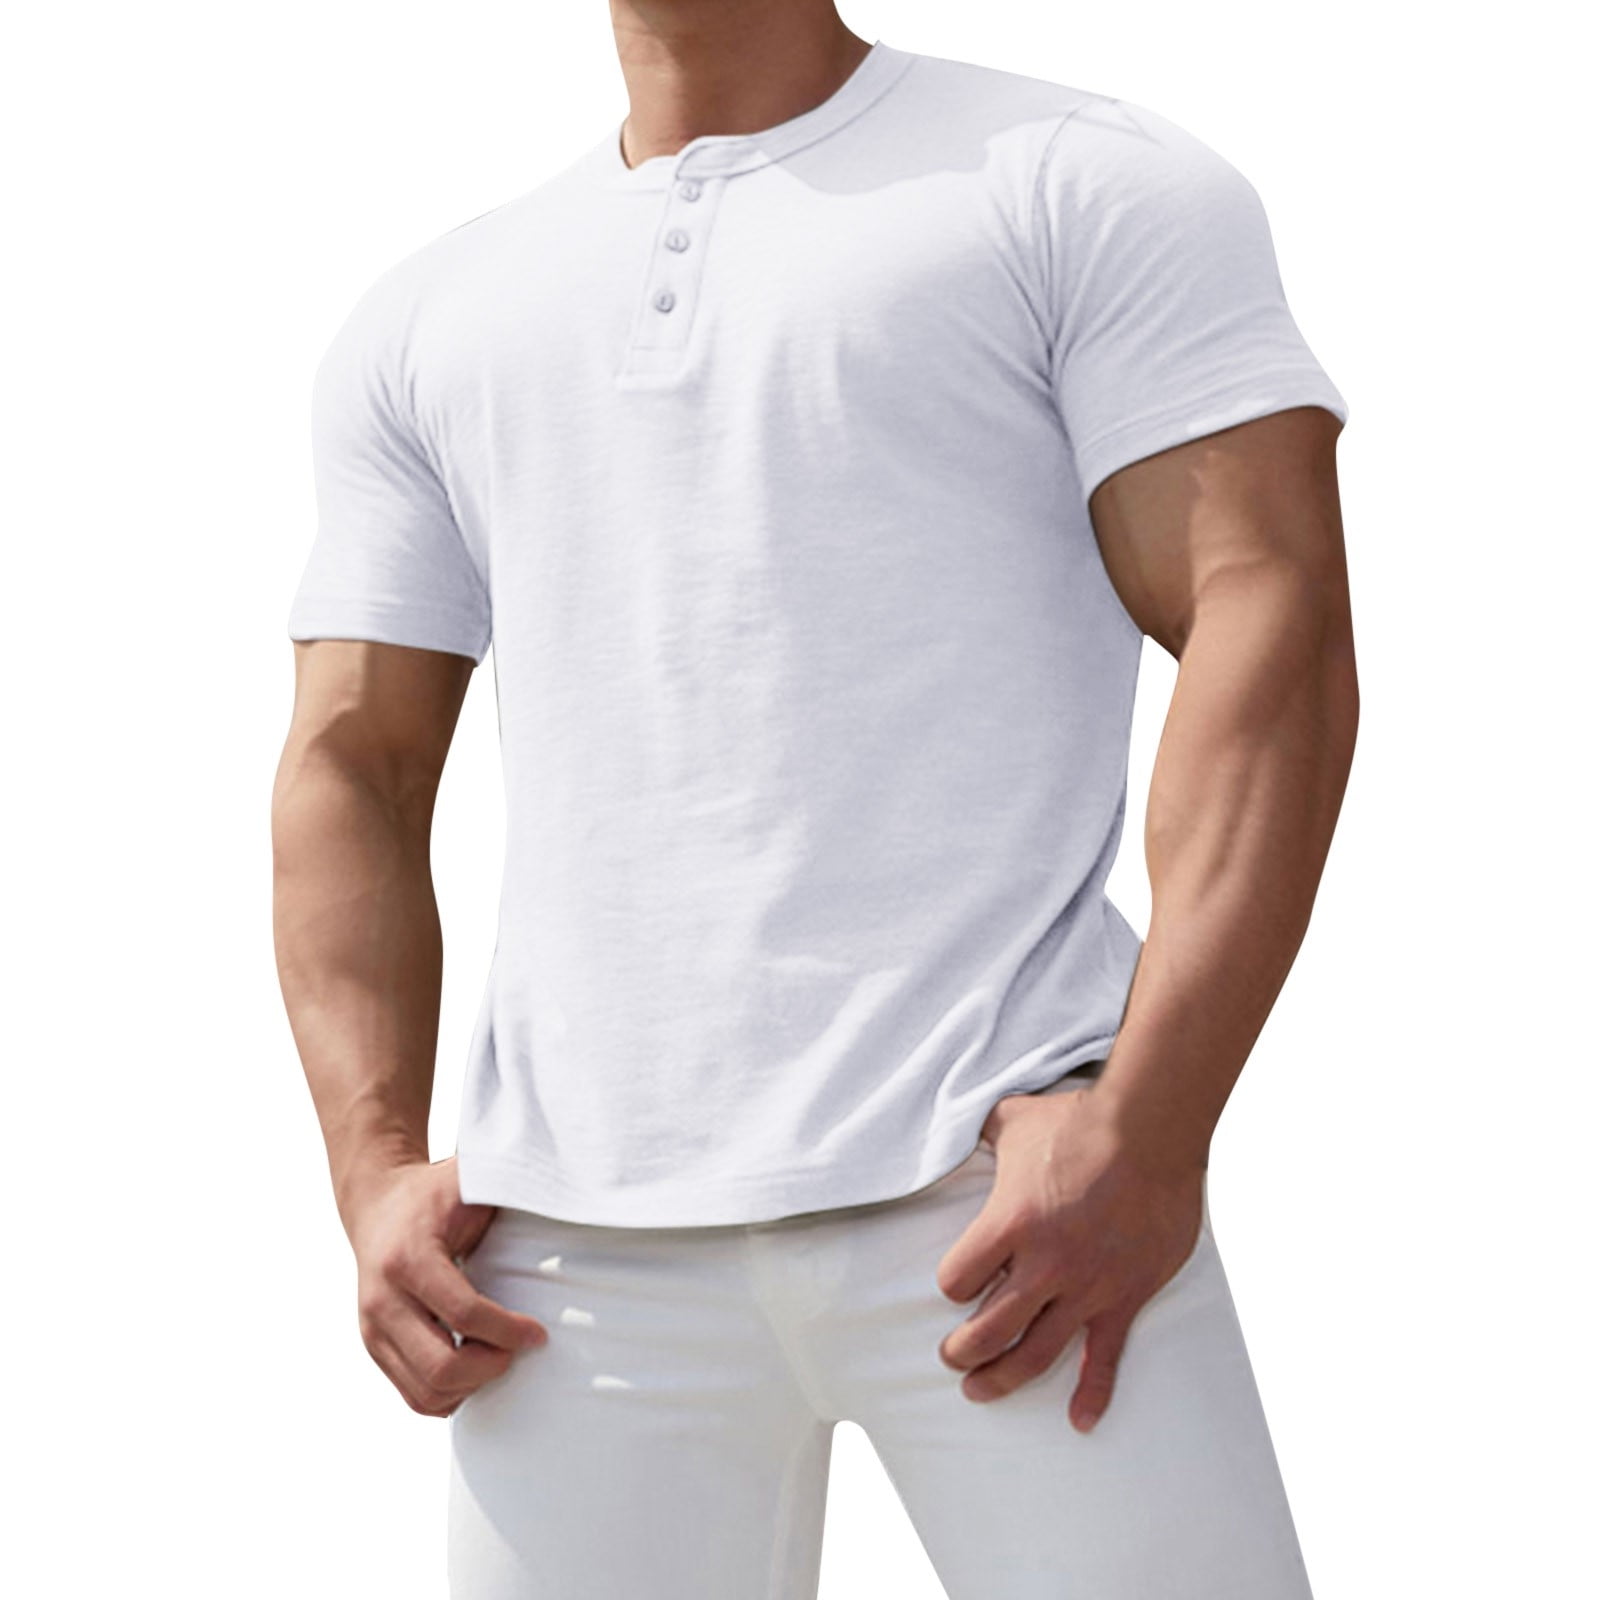 Herkenning grens Fragiel kpoplk Mens Tshirts,Short Sleeve Polo Shirts Men Button Up Graphic Casual  Collar Tshirt Trendy Designs Tees Streetwear Shirts Teens(White,XXL) -  Walmart.com